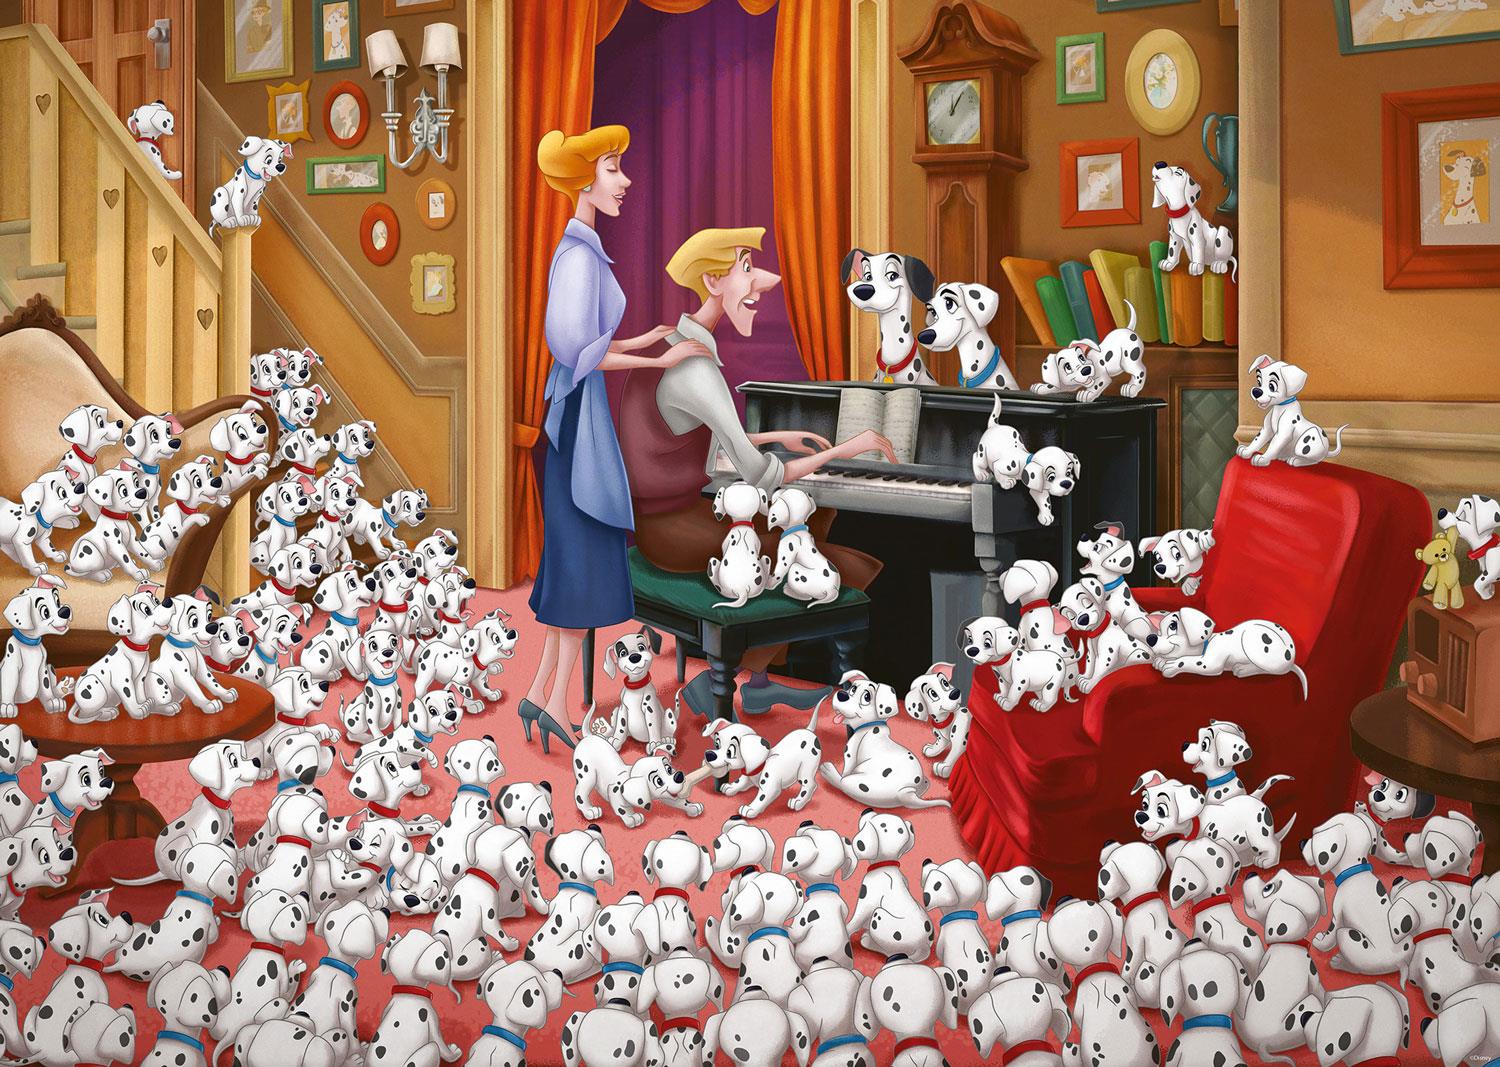 Ravensburger Disney Collector's Edition 101 Dalmatians Jigsaw Puzzle (1000 Pieces)